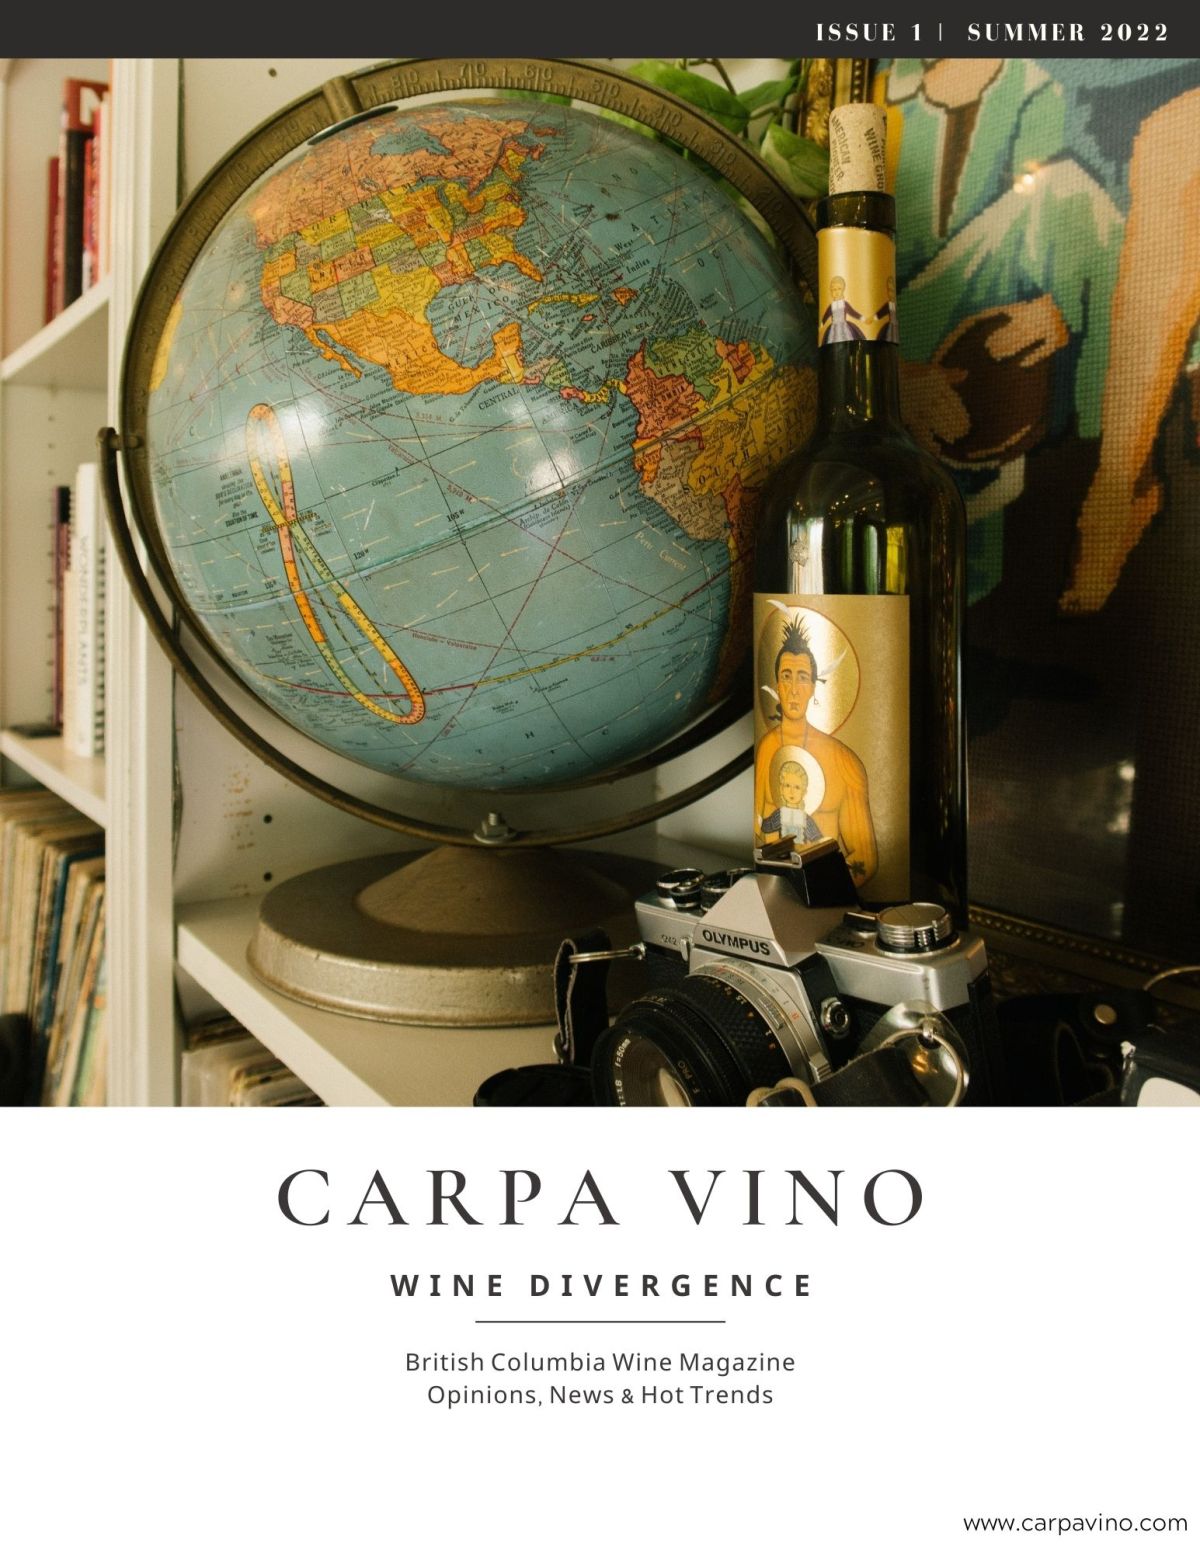 Carpa Vino – Wine Divergence